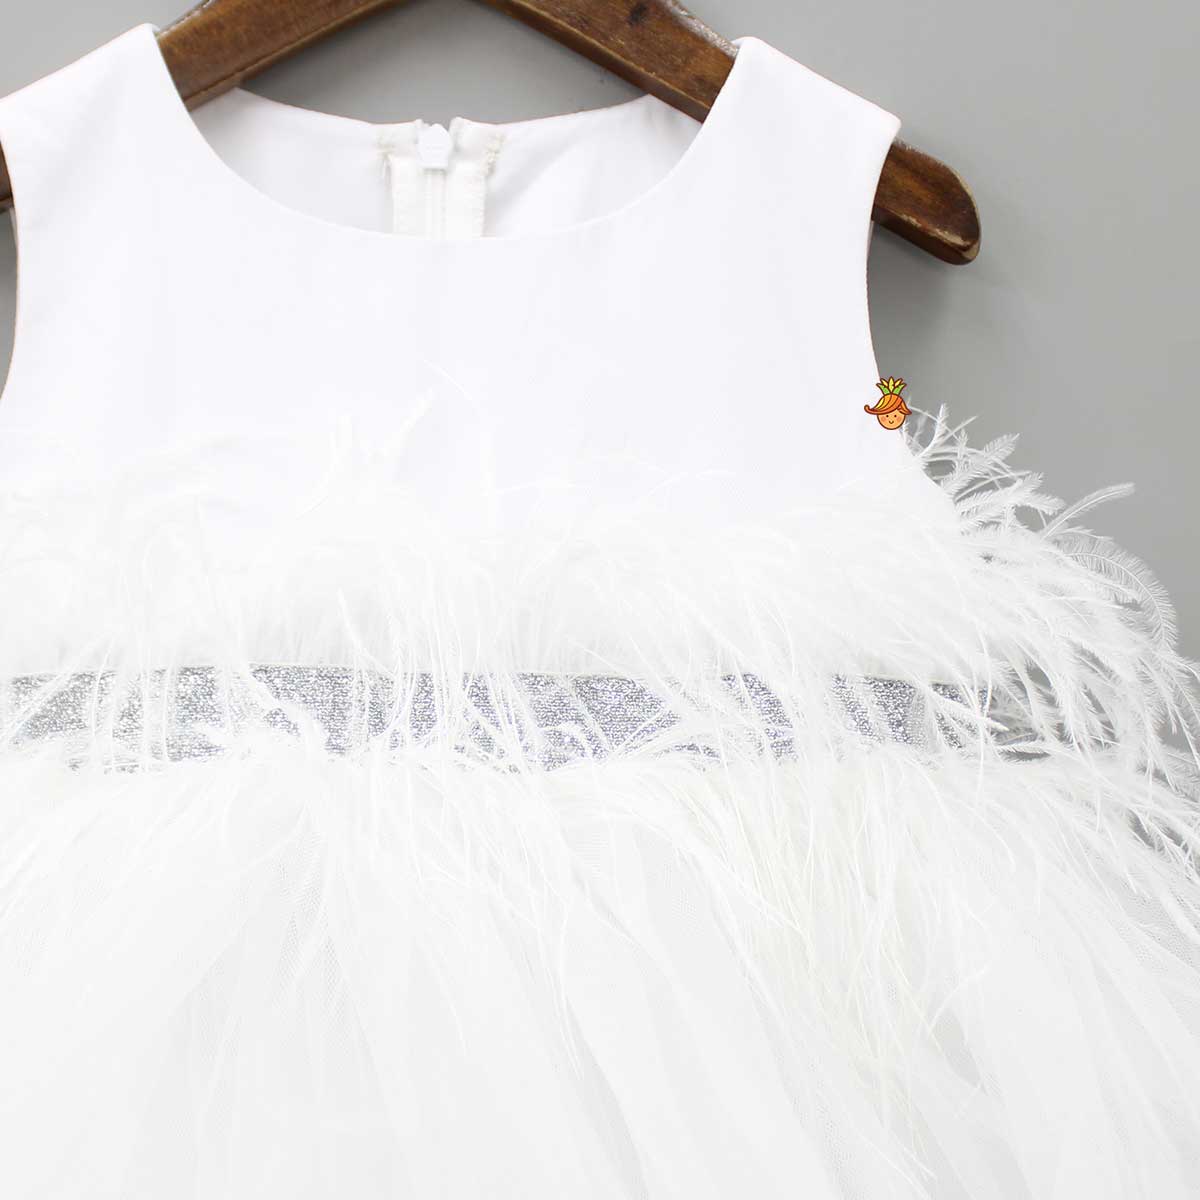 Pre Order: Classy Lace Work White Dress